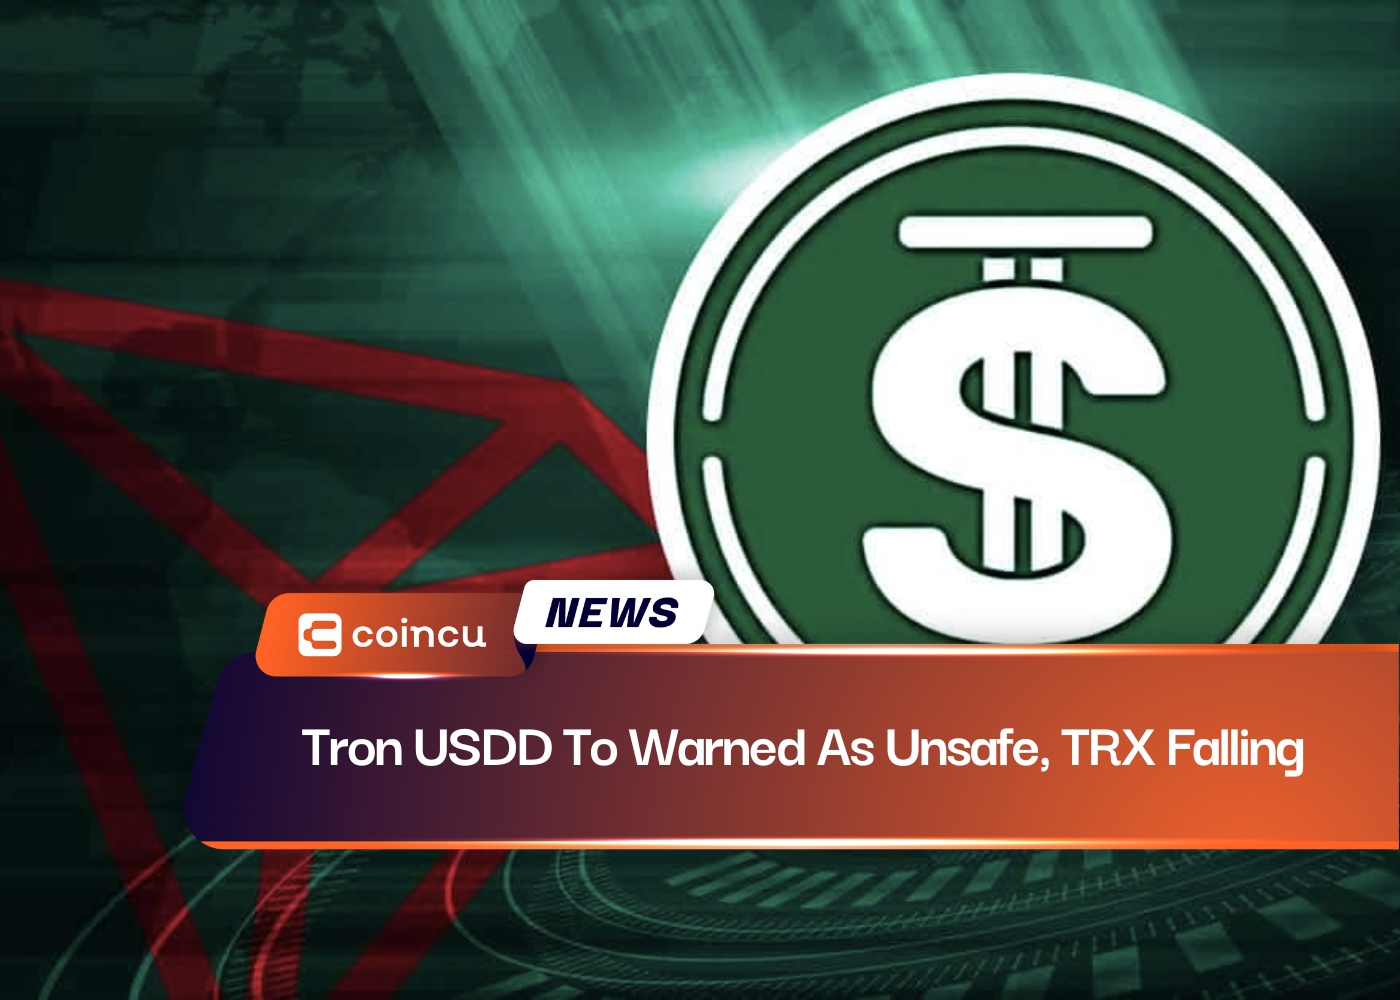 Tron USDD To Warned As Unsafe, TRX Falling